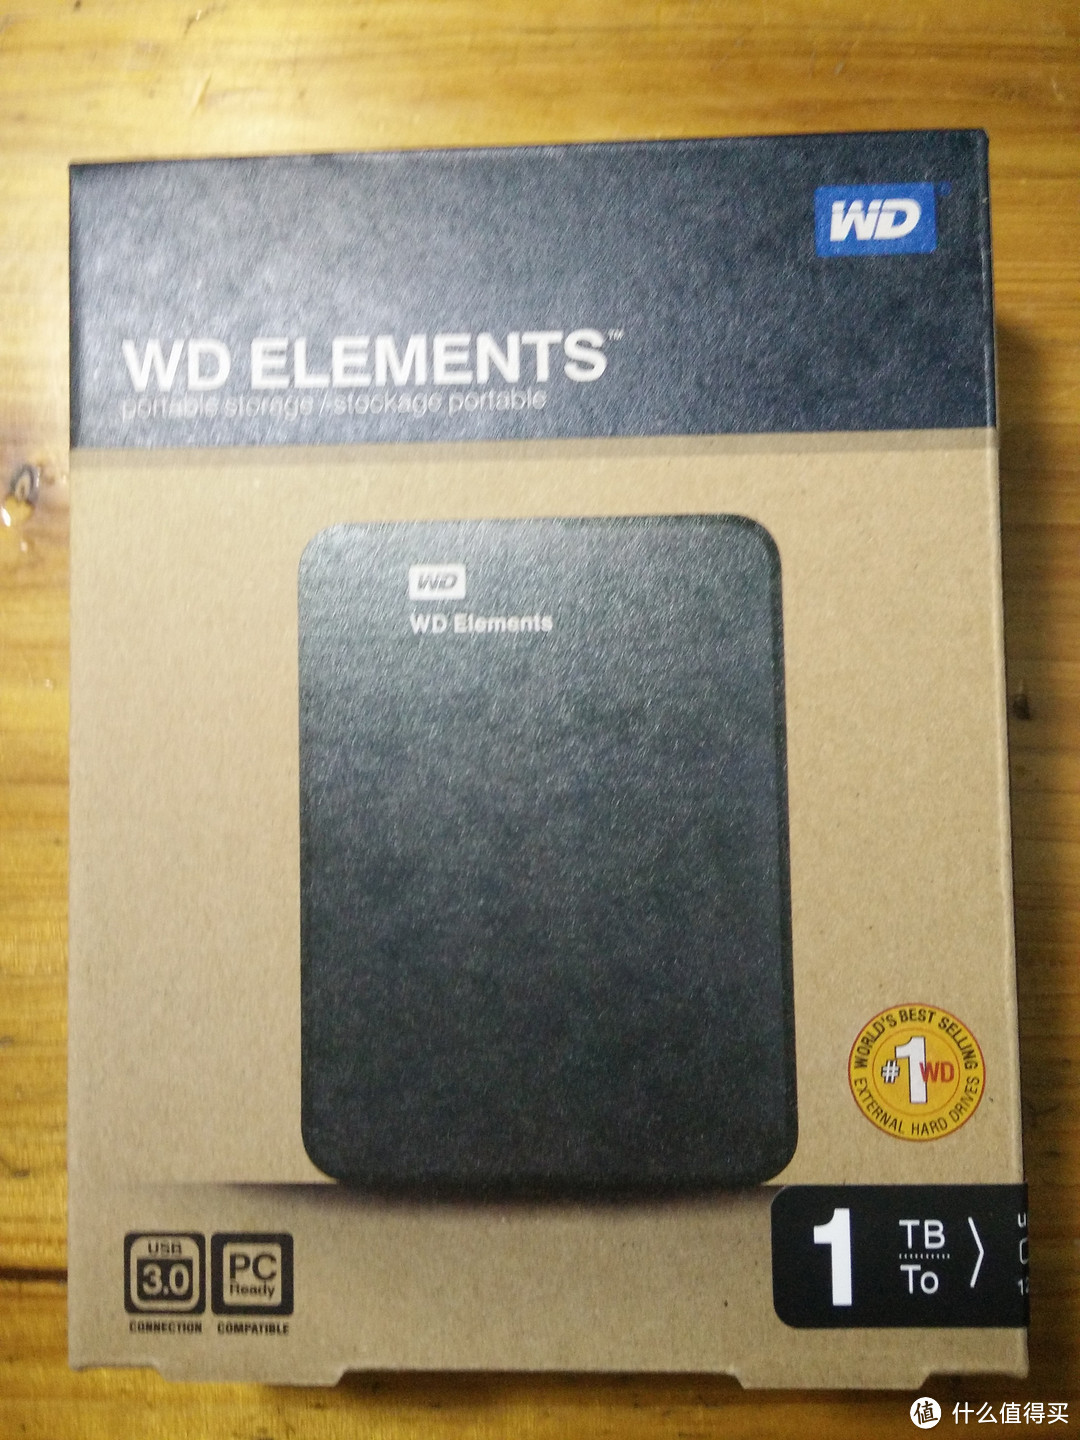 WD 西部数据 Elements 2.5英寸 1TB移动硬盘 开箱